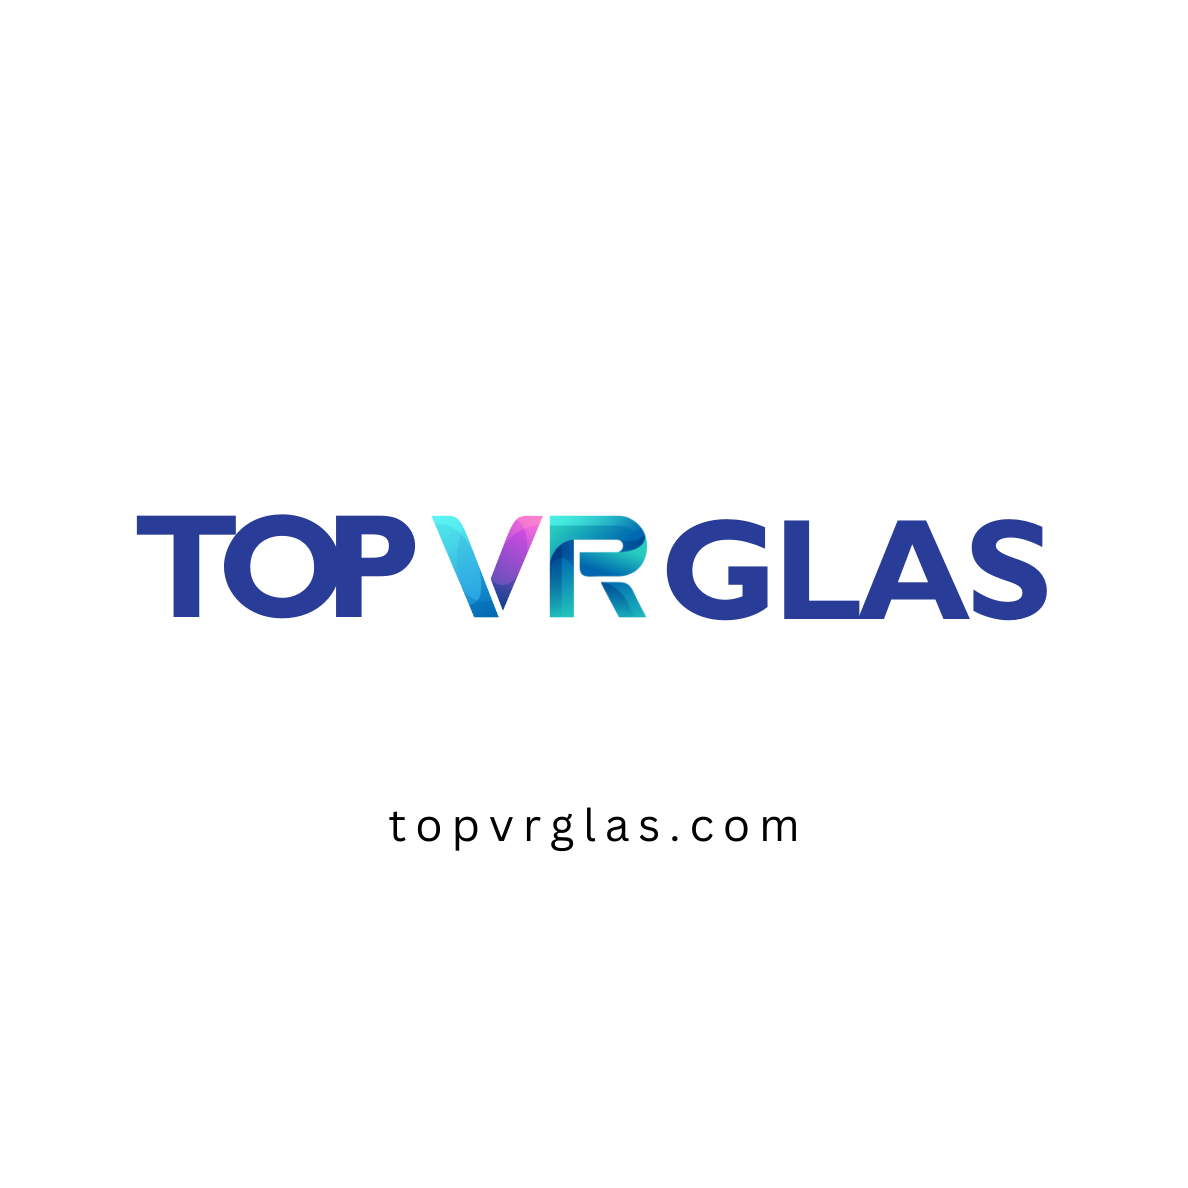 topvrglas.com - domain for sale